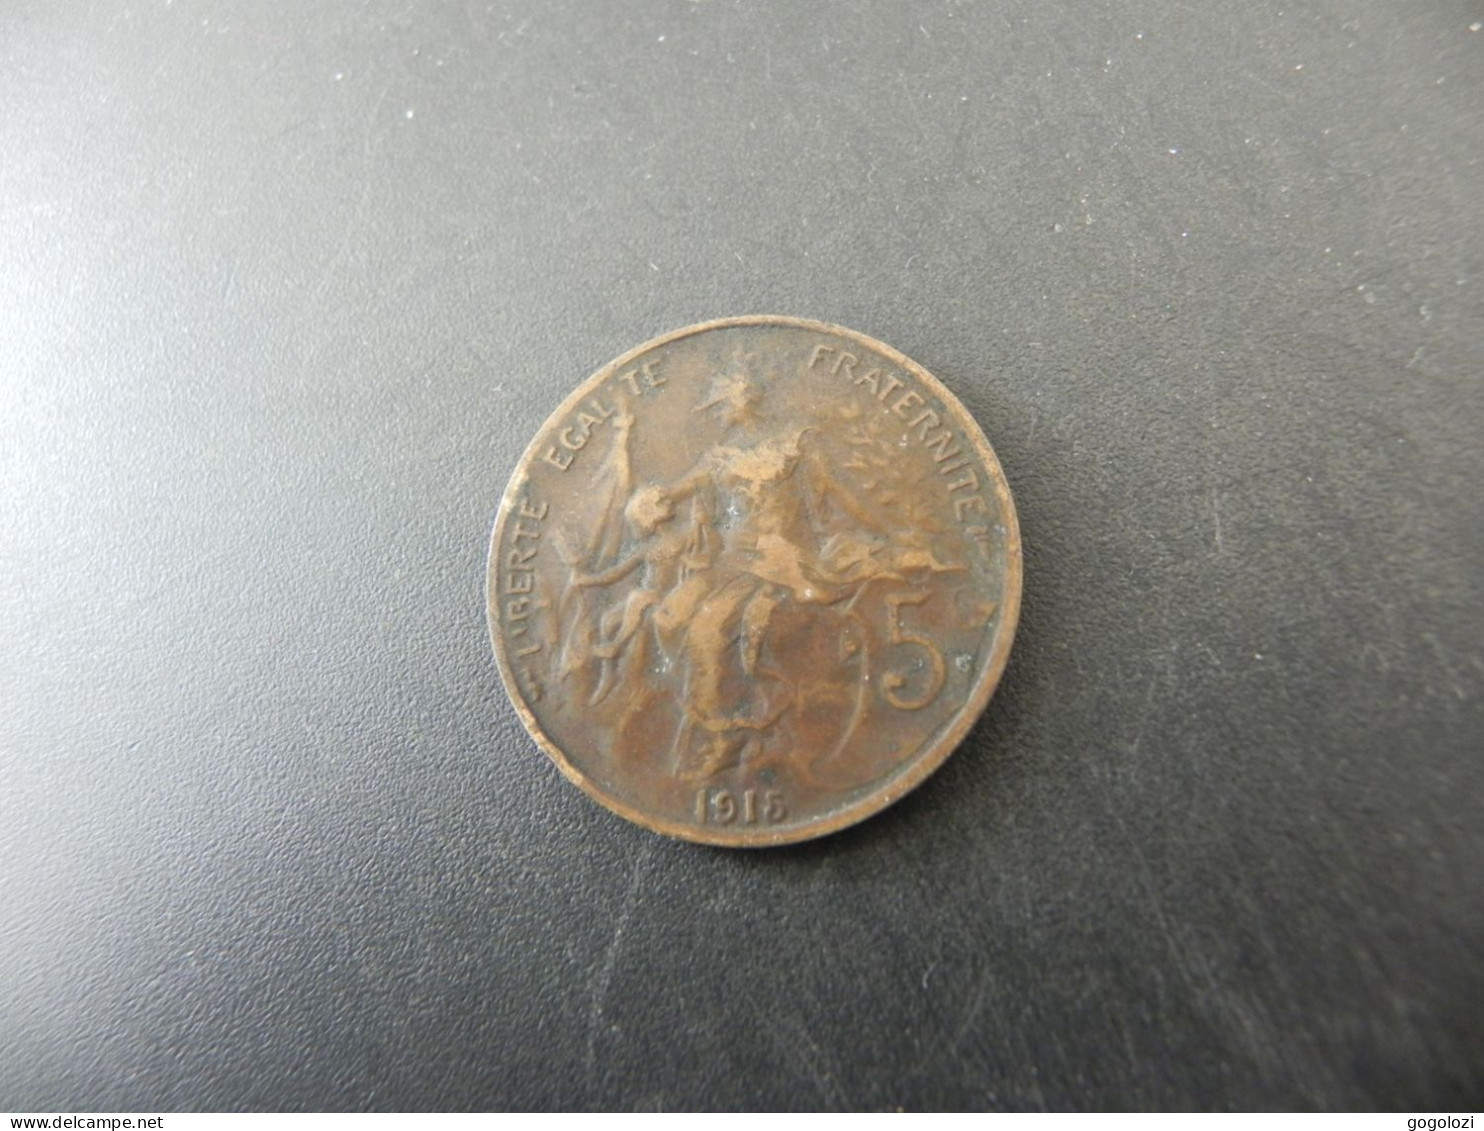 France 5 Centimes 1915 - 5 Centimes